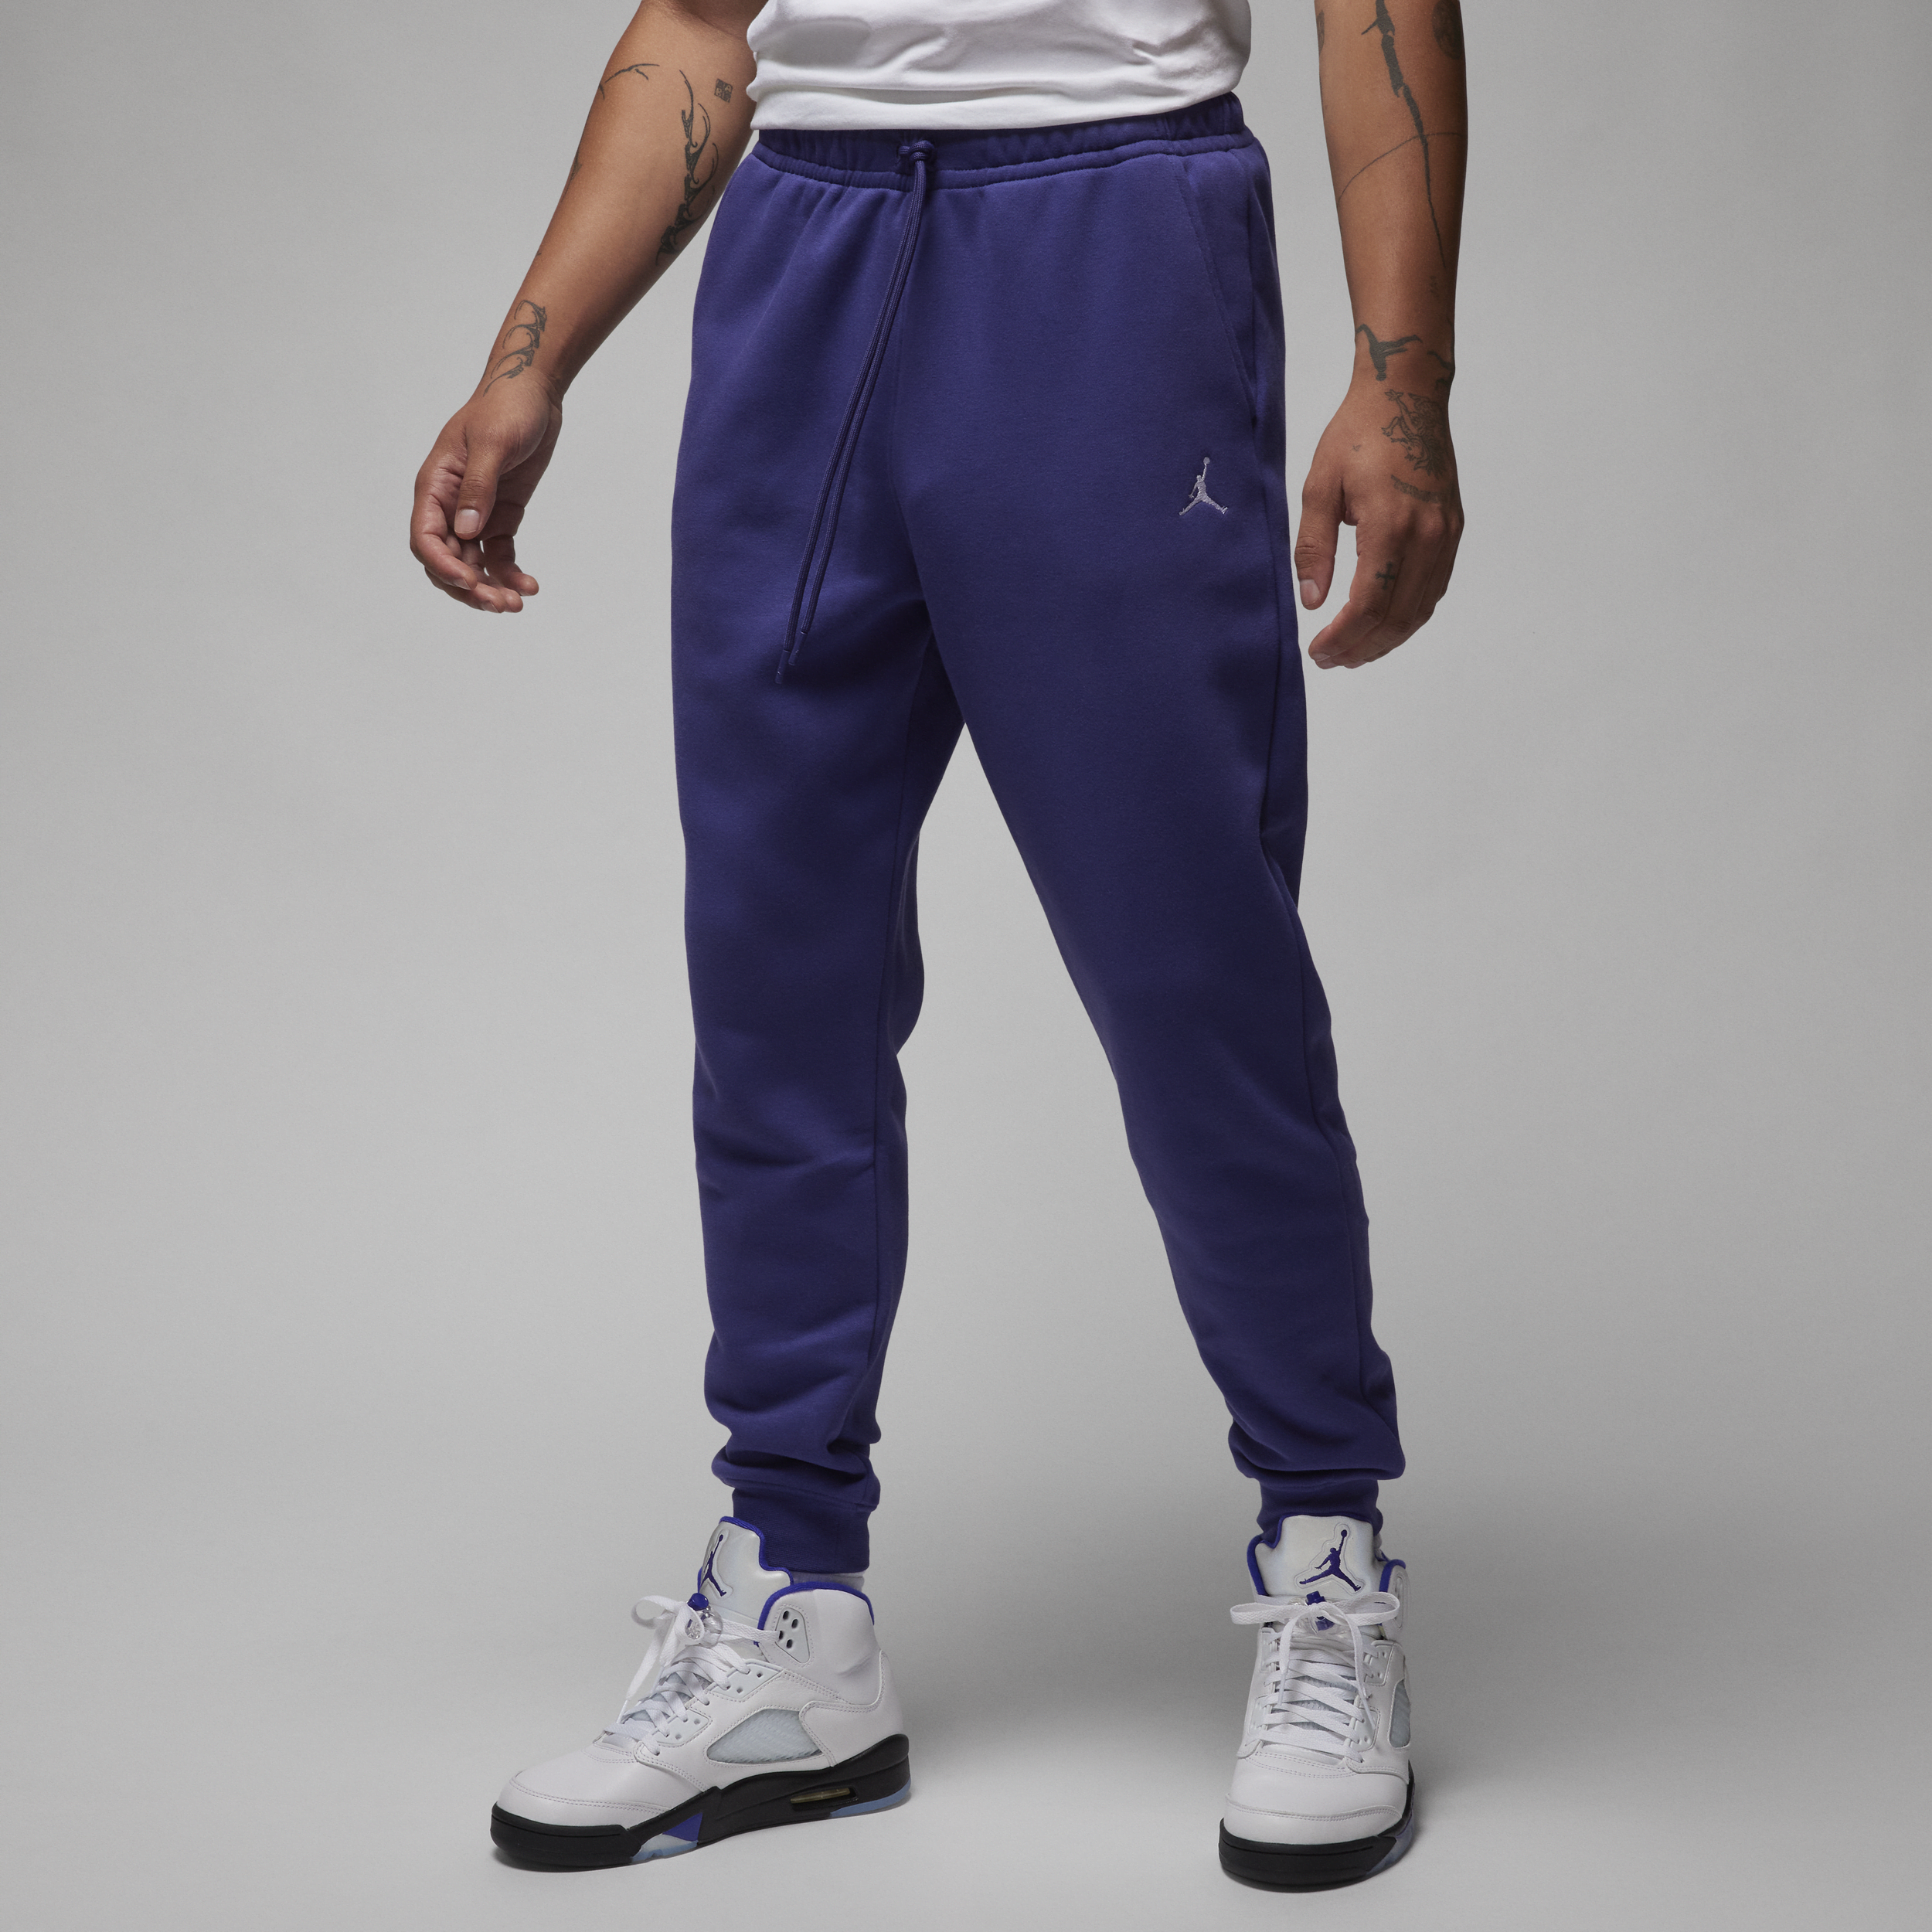 Jordan Brooklyn Fleece-sweatpants til mænd - lilla